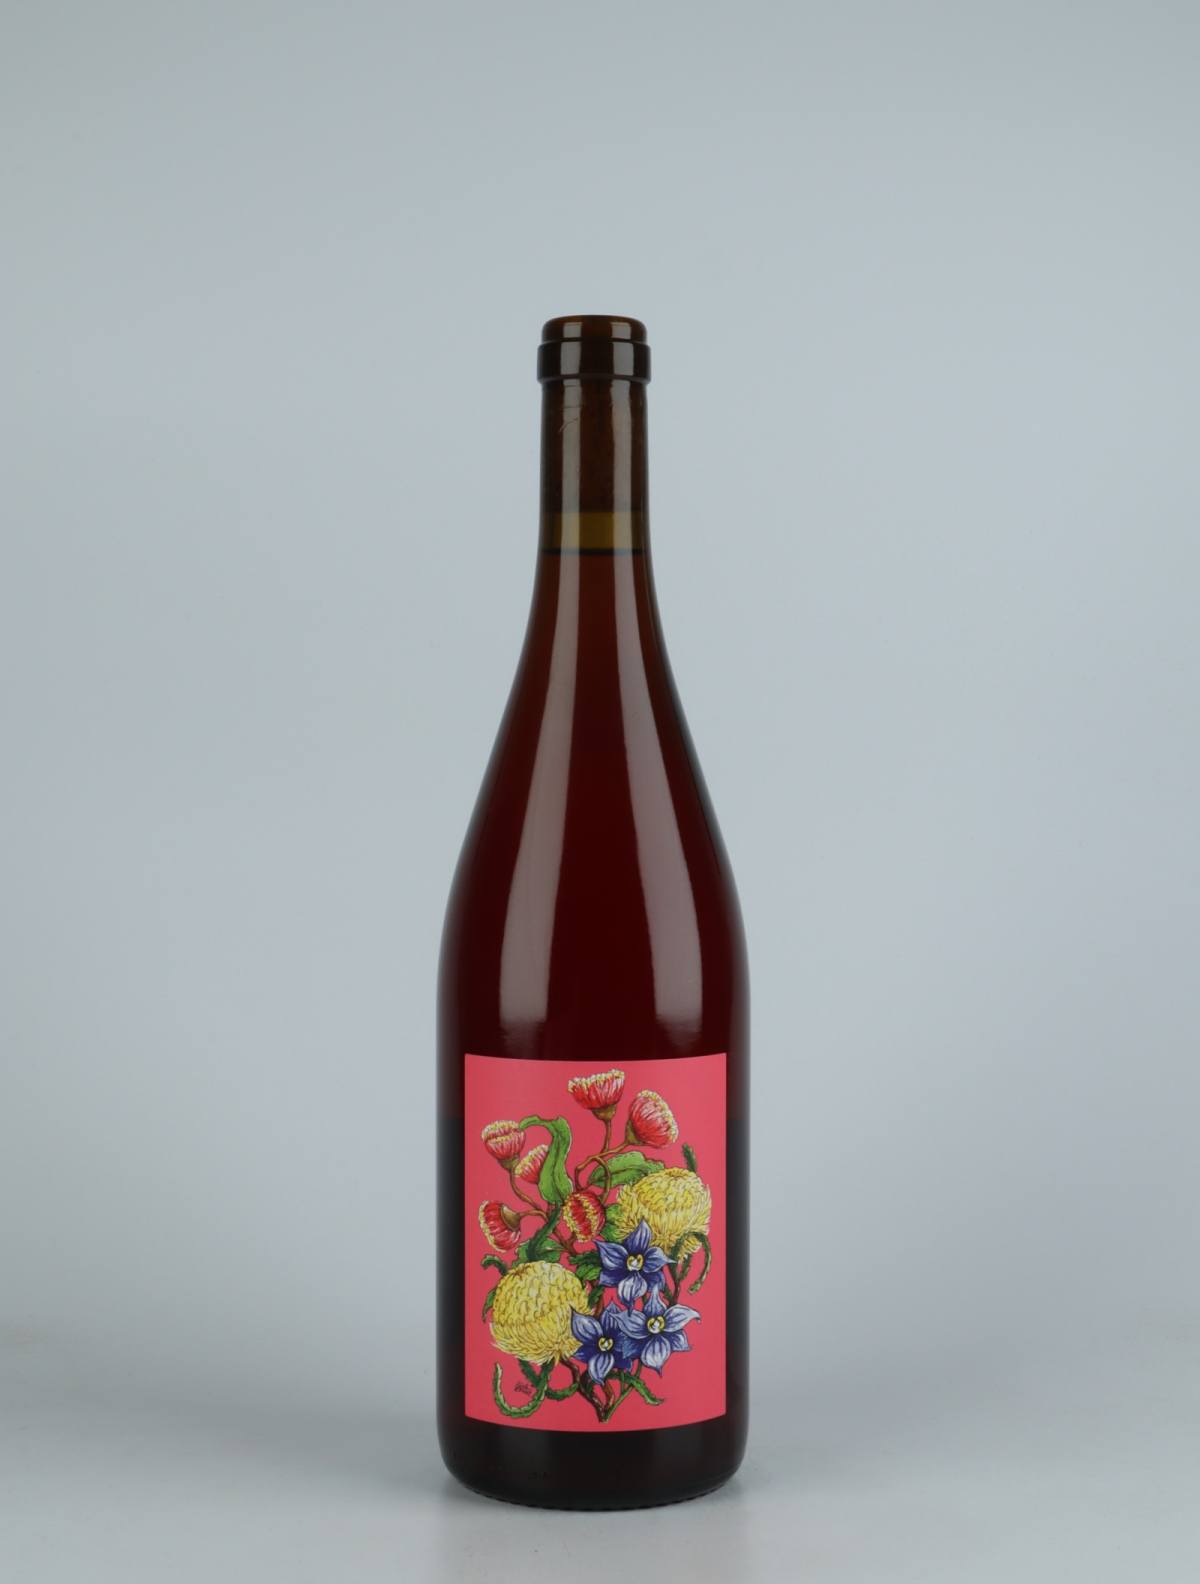 En flaske 2021 Pinot Noir, Pinot Gris, Chardonnay Rosé fra Borachio, Adelaide Hills i Australien